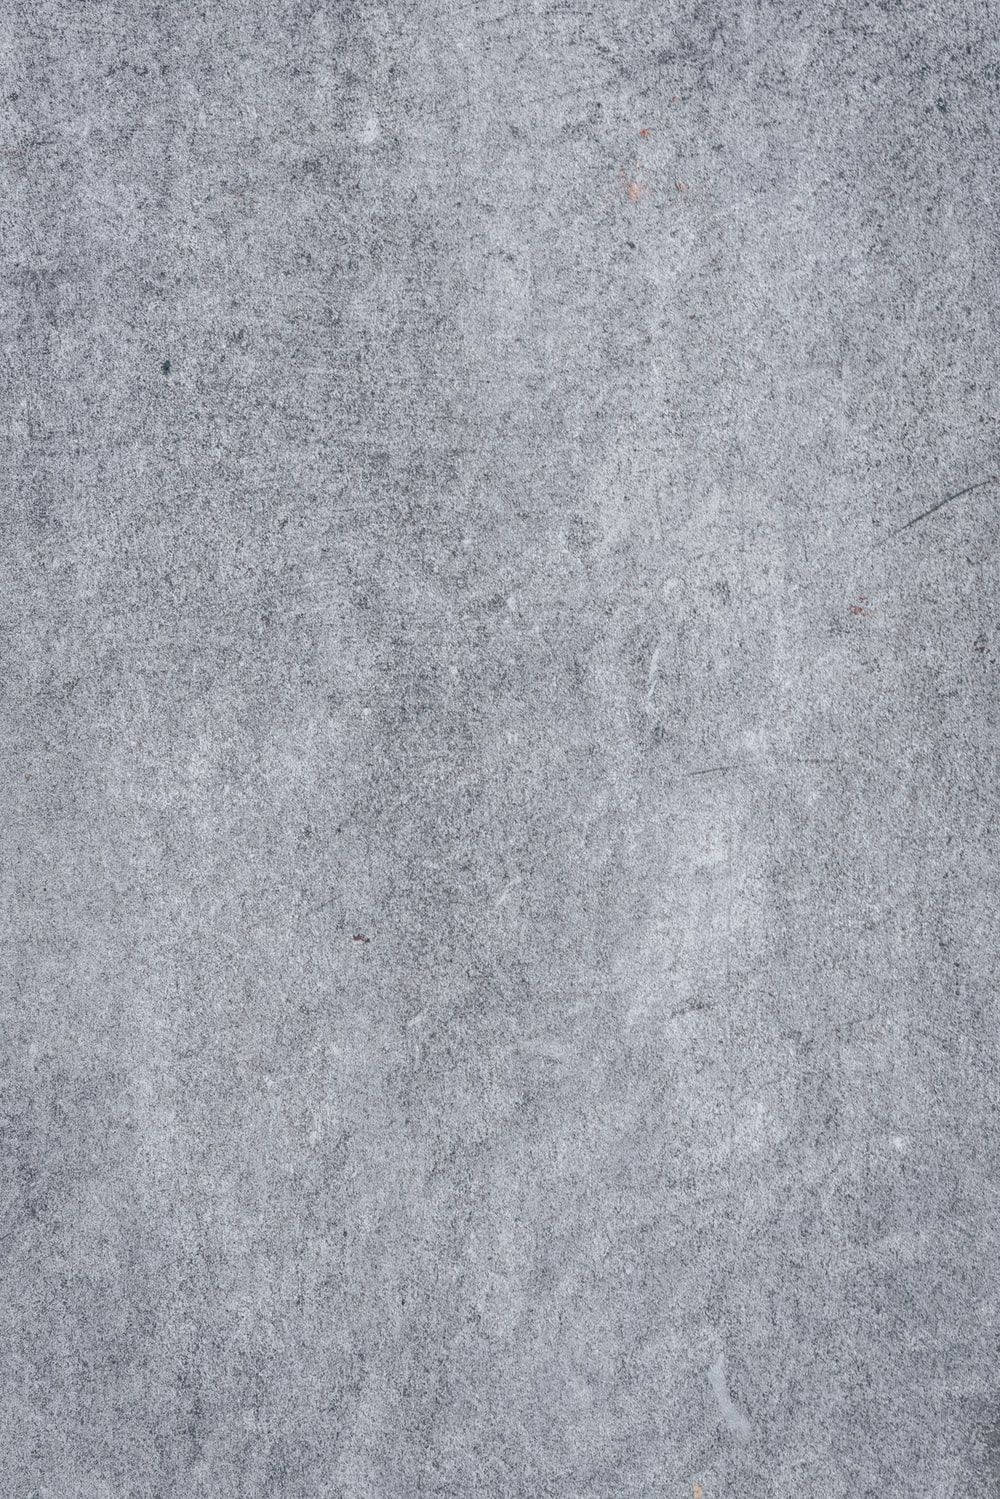 Light Gray Stone Texture